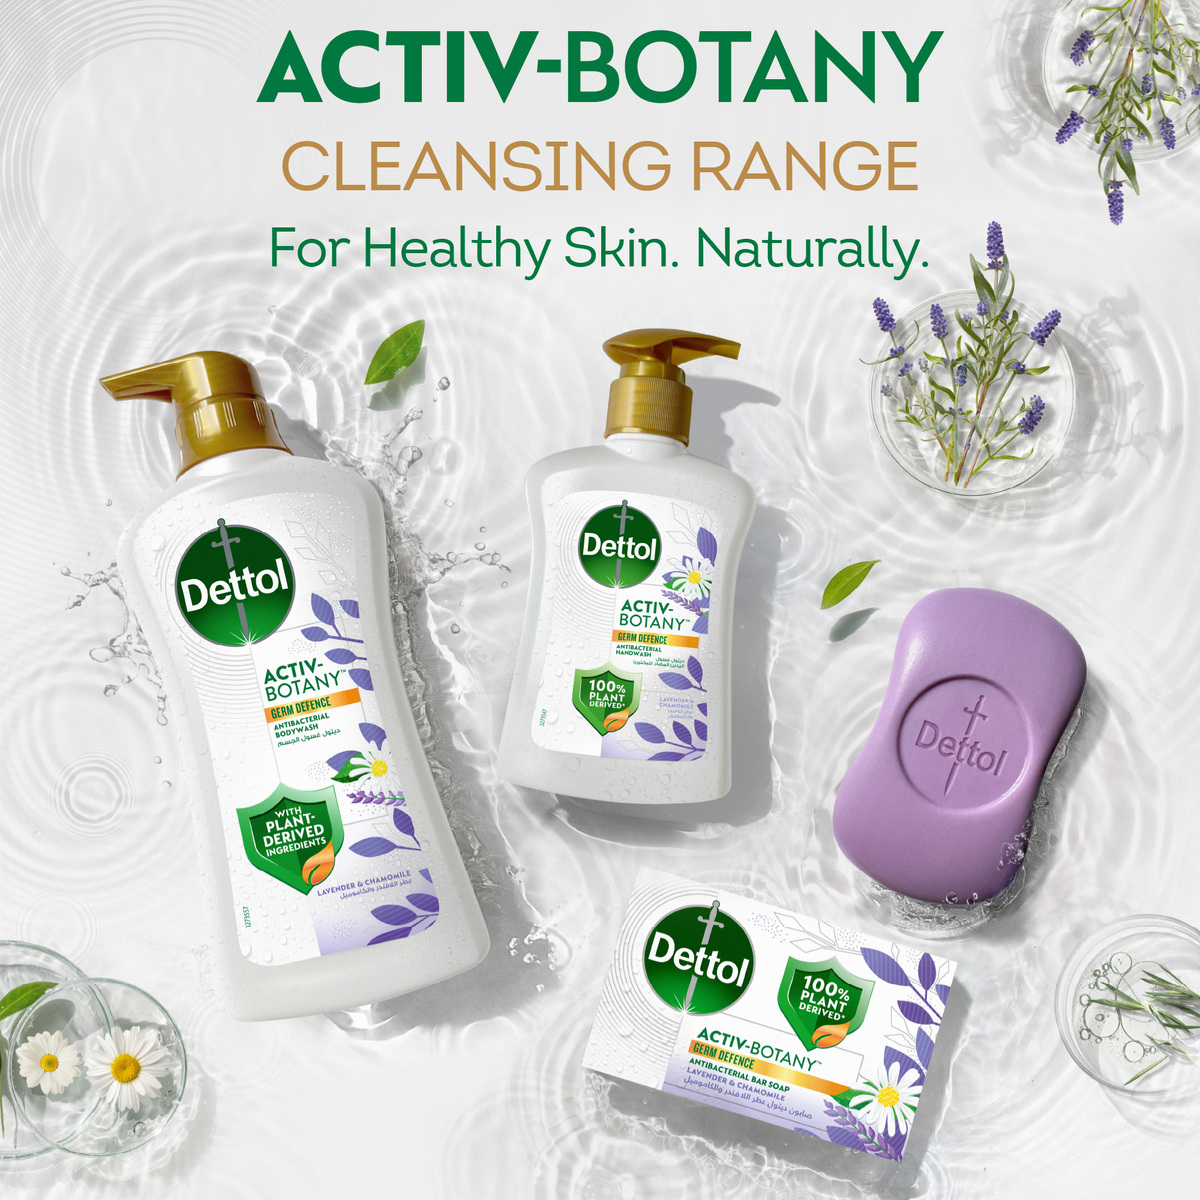 Dettol Activ-Botany Lavender & Chamomile Antibacterial Handwash Value Pack 2 x 200 ml